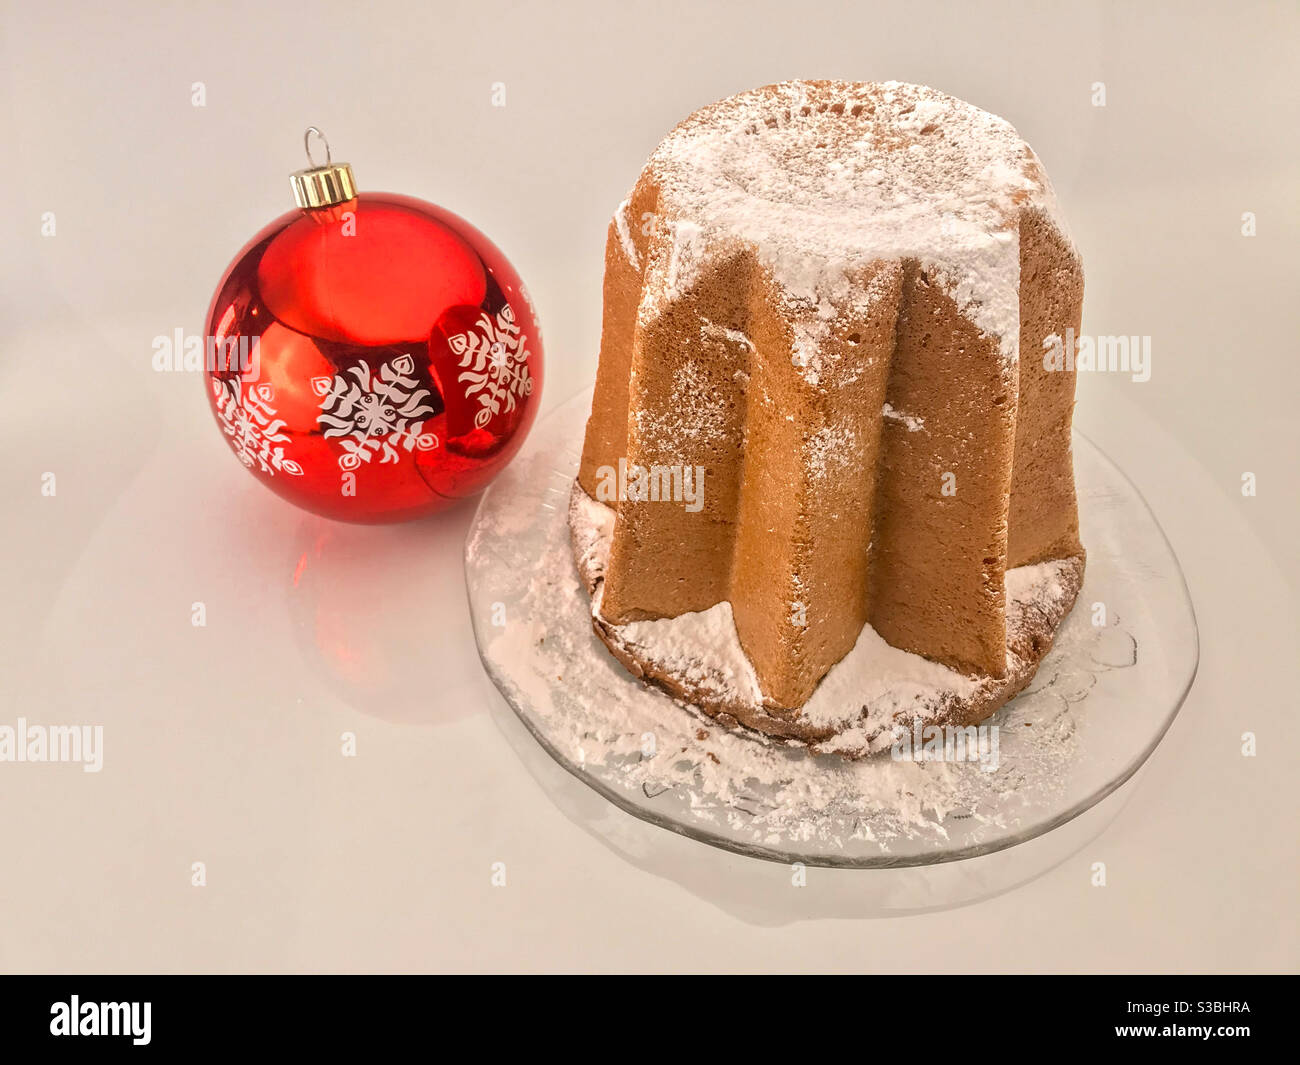 https://c8.alamy.com/comp/S3BHRA/pandoro-traditional-italian-christmas-cake-with-icing-sugar-near-to-christmas-ball-S3BHRA.jpg